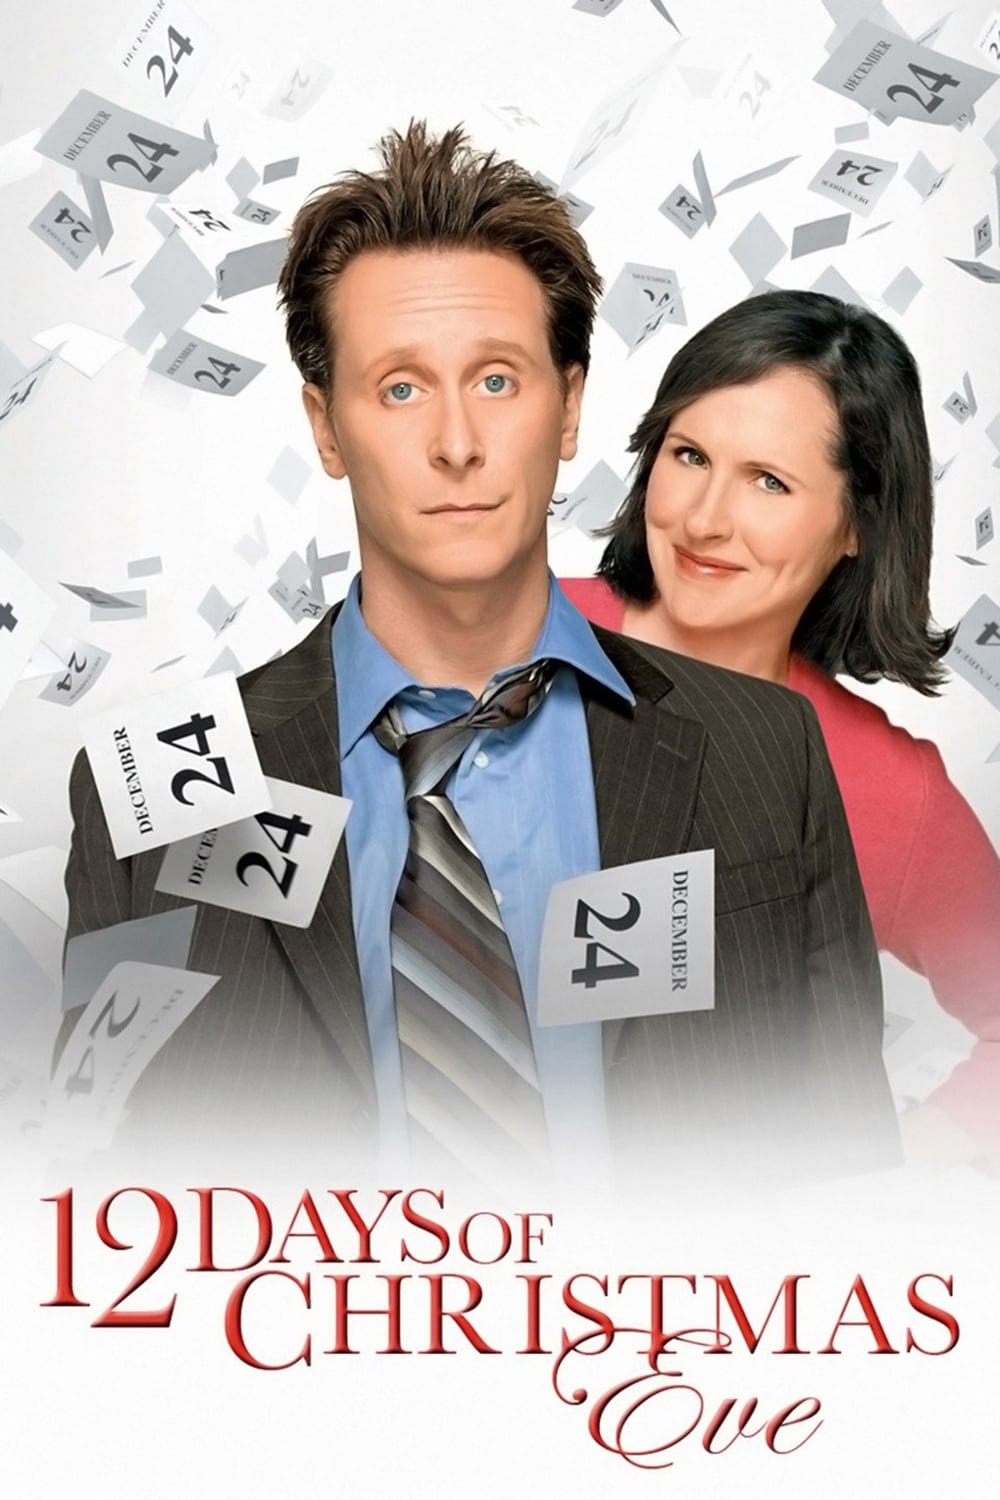 12 Days of Christmas Eve (2004)